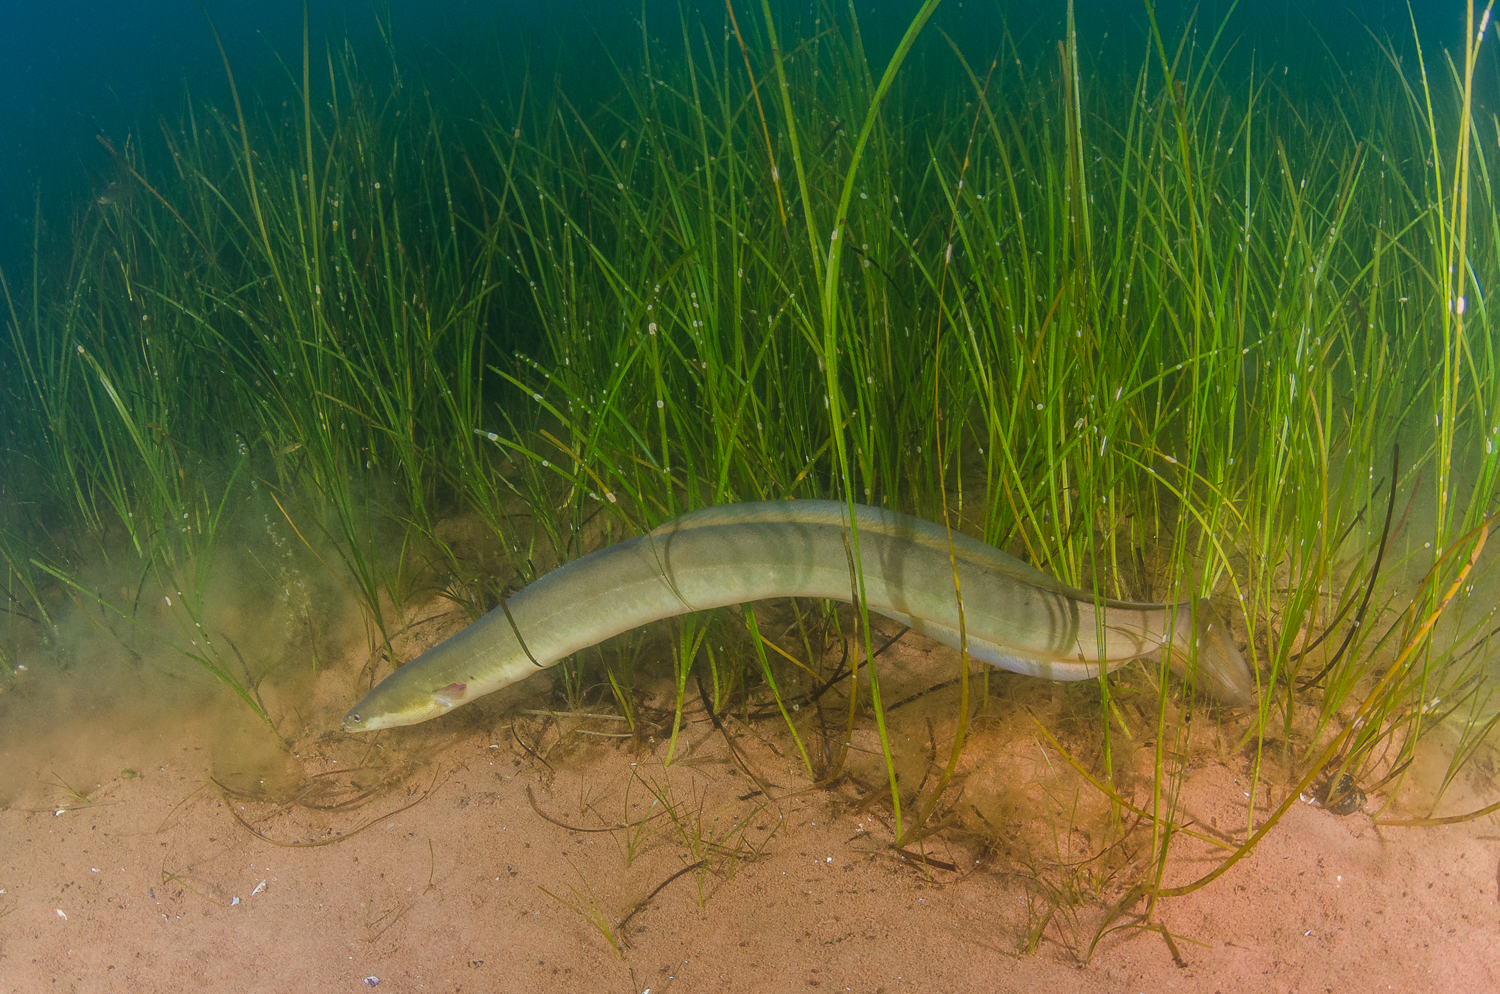 Eel in Namesake Grass